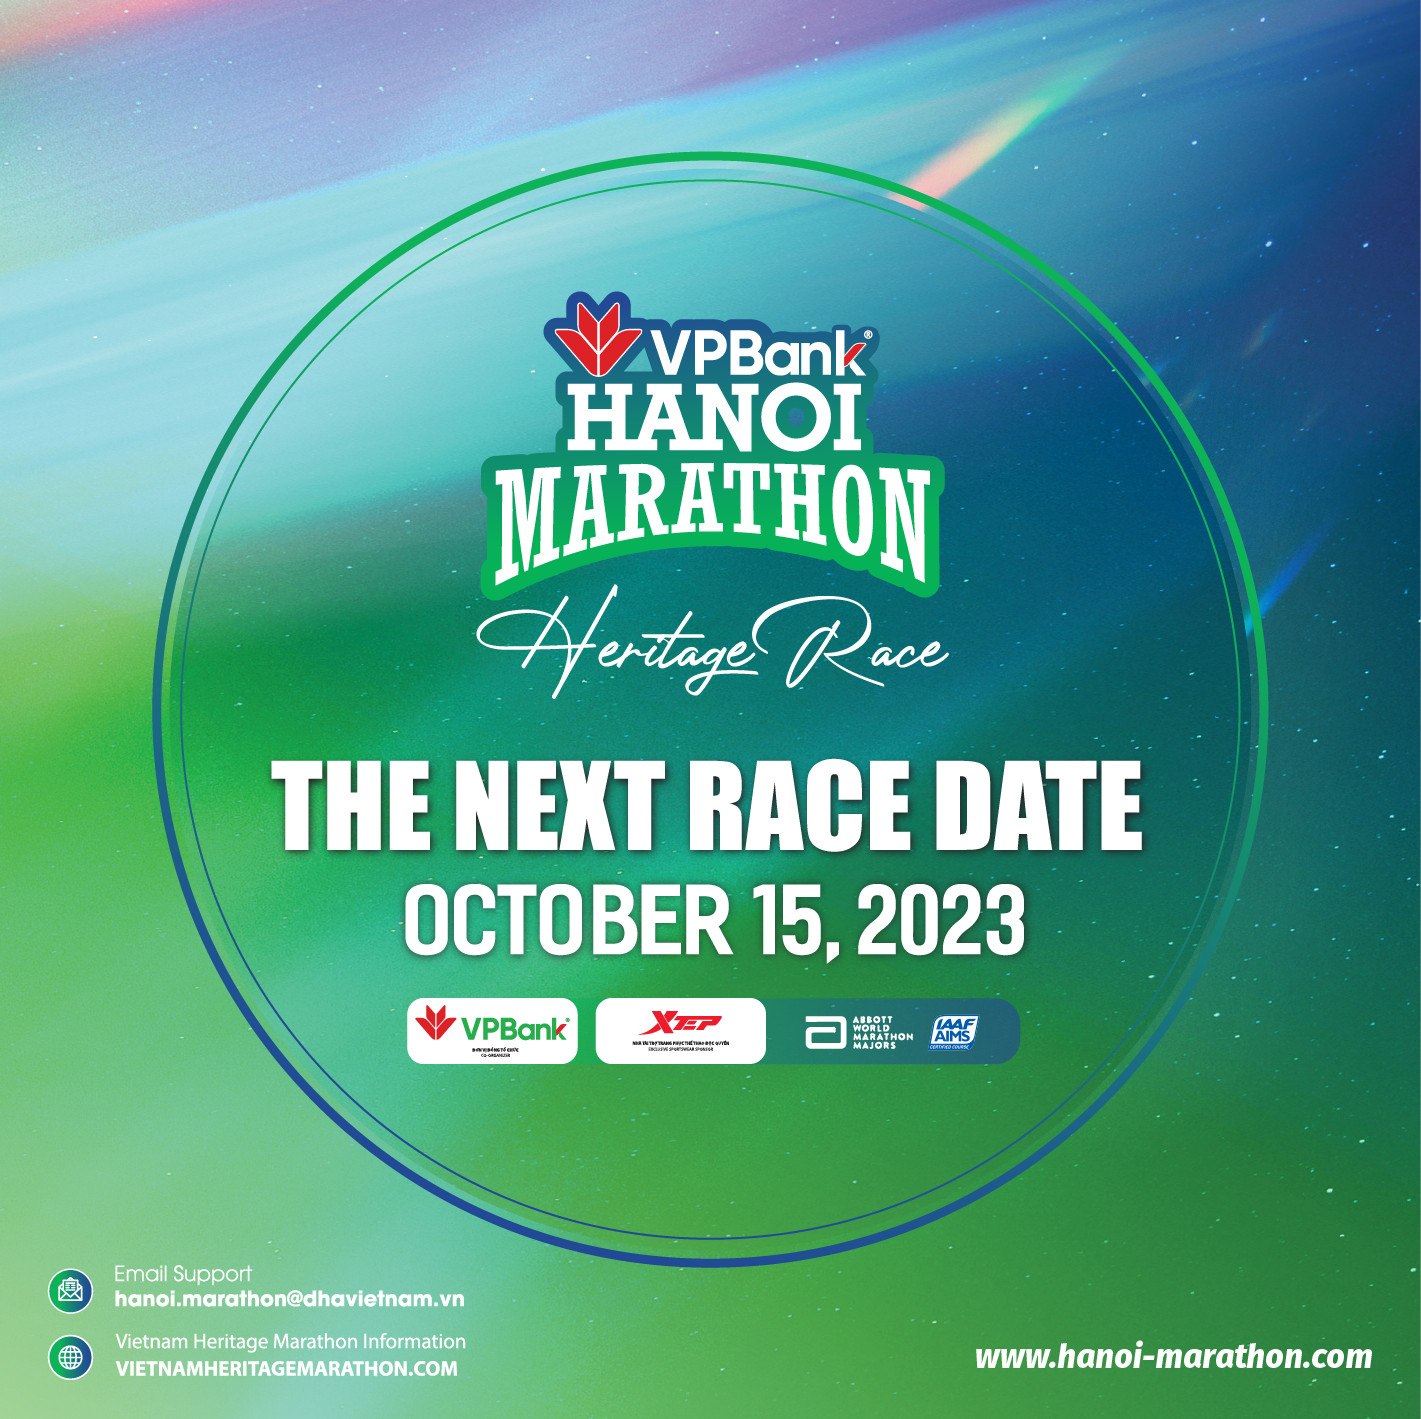 New Race Date For VPBank Hanoi Marathon: Oct 15, 2023